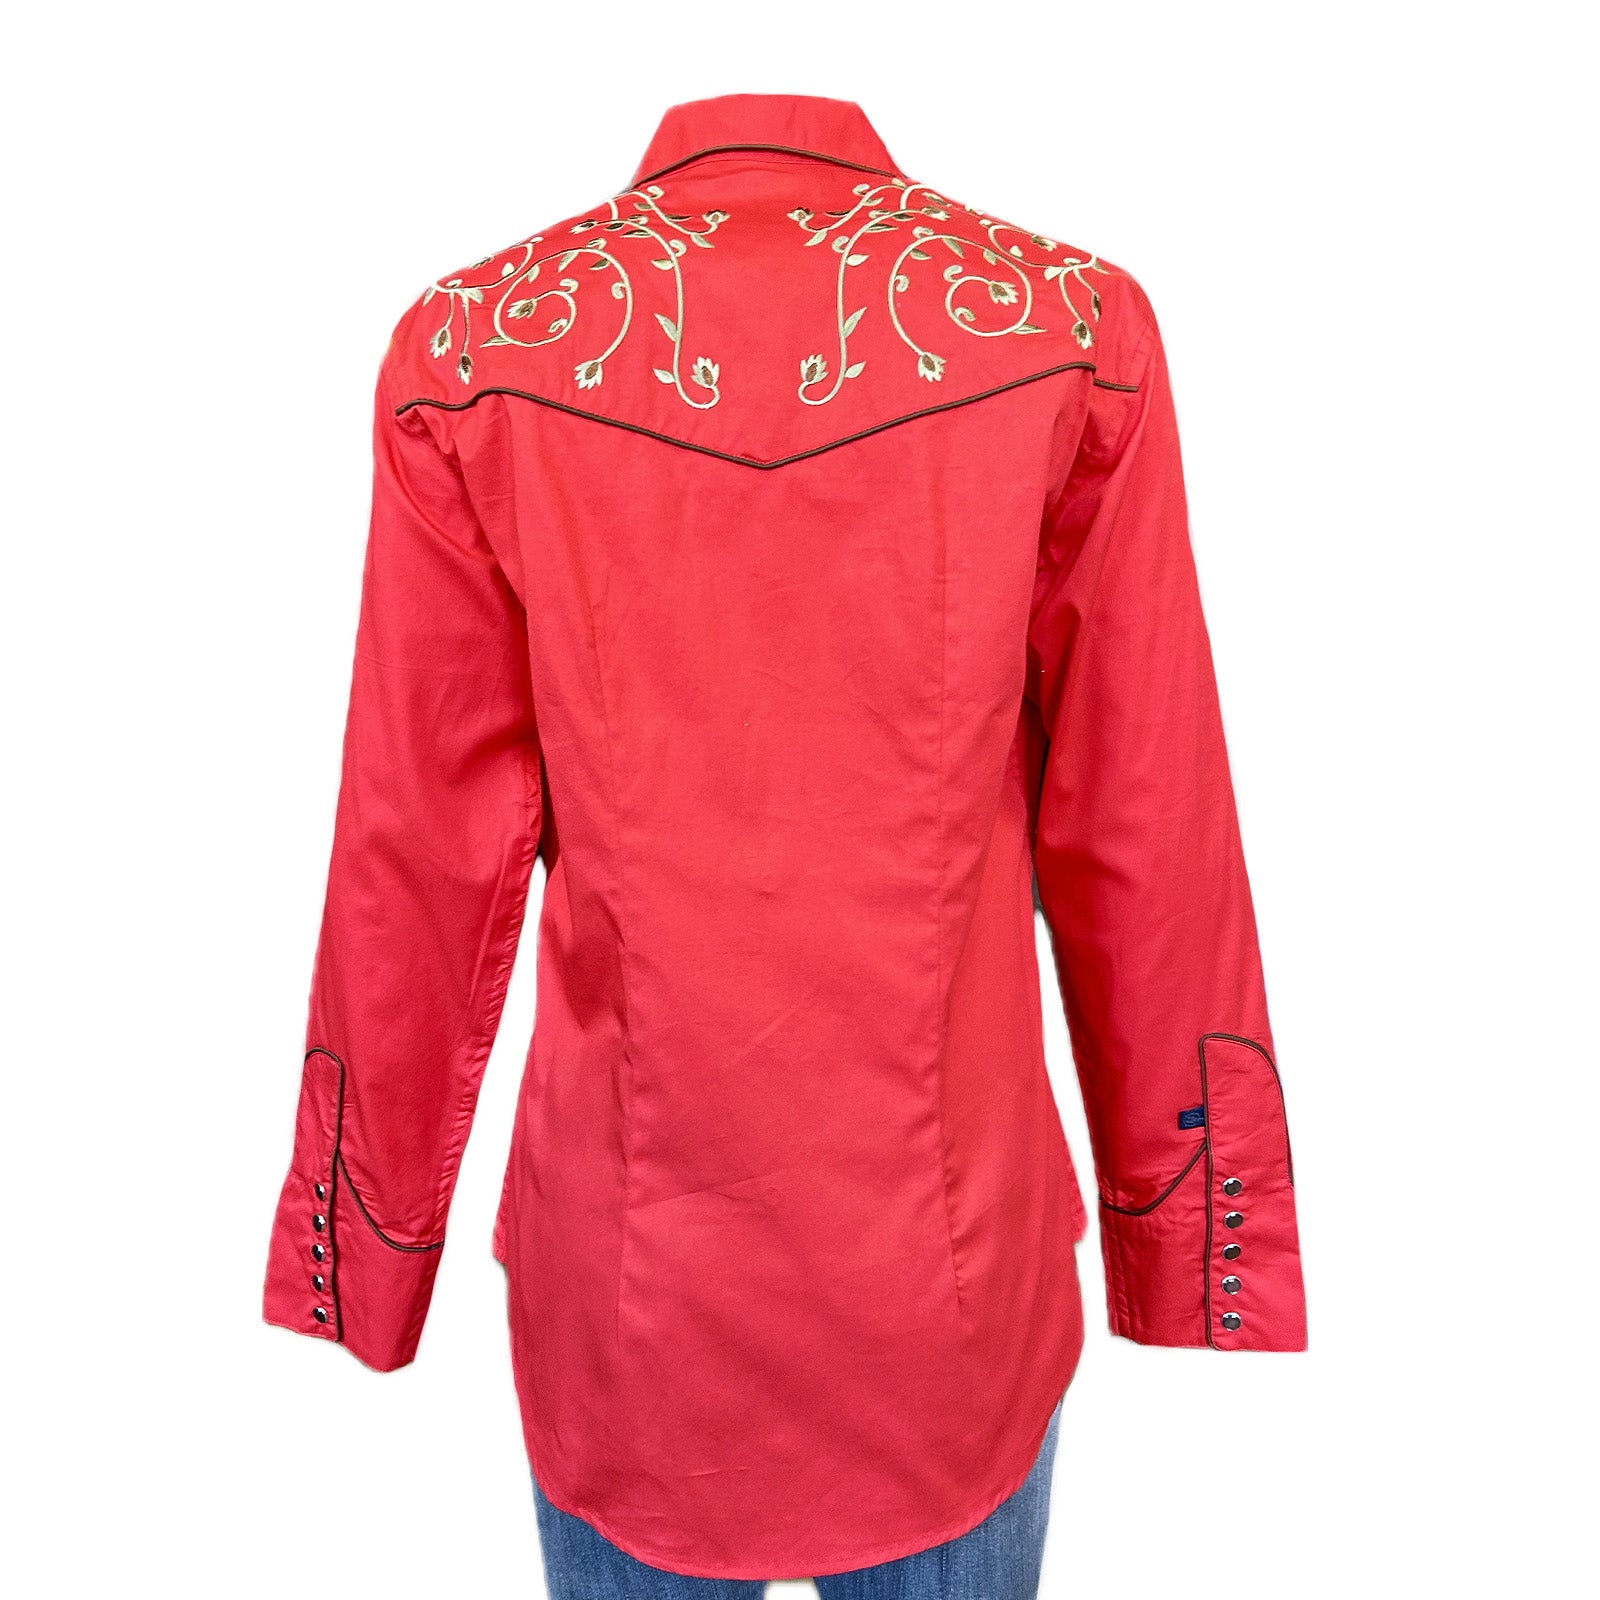 Women’s Rhinestones & Scrolls Embroidery Western Shirt in Red